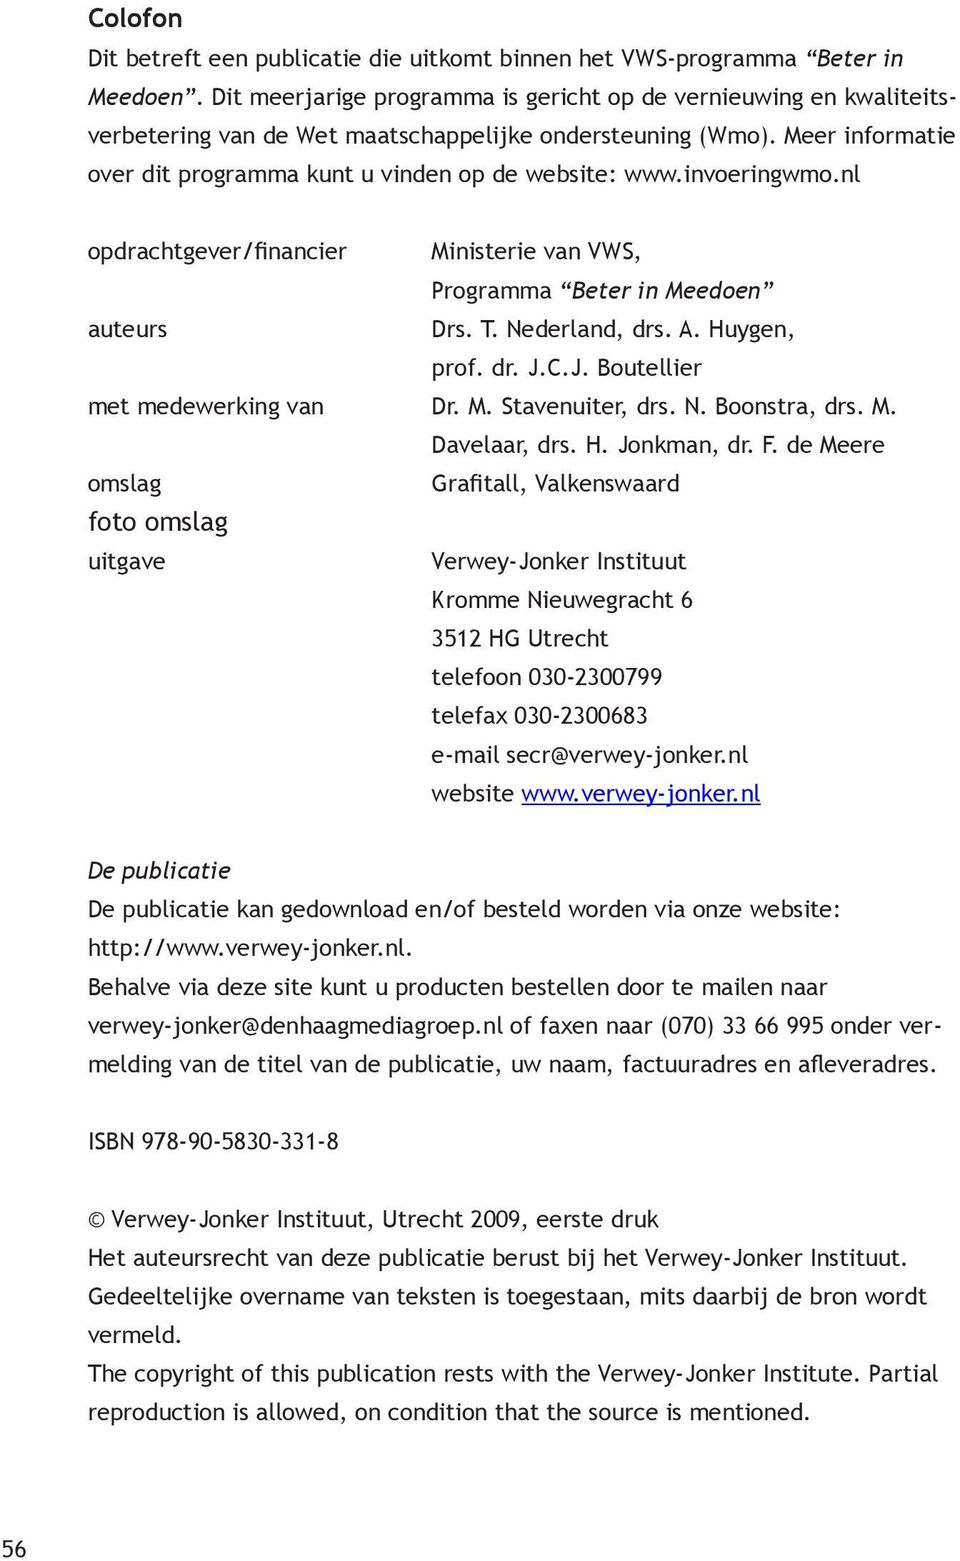 invoeringwmo.nl opdrachtgever/financier Ministerie van VWS, Programma Beter in Meedoen auteurs Drs. T. Nederland, drs. A. Huygen, prof. dr. J.C.J. Boutellier met medewerking van Dr. M. Stavenuiter, drs.